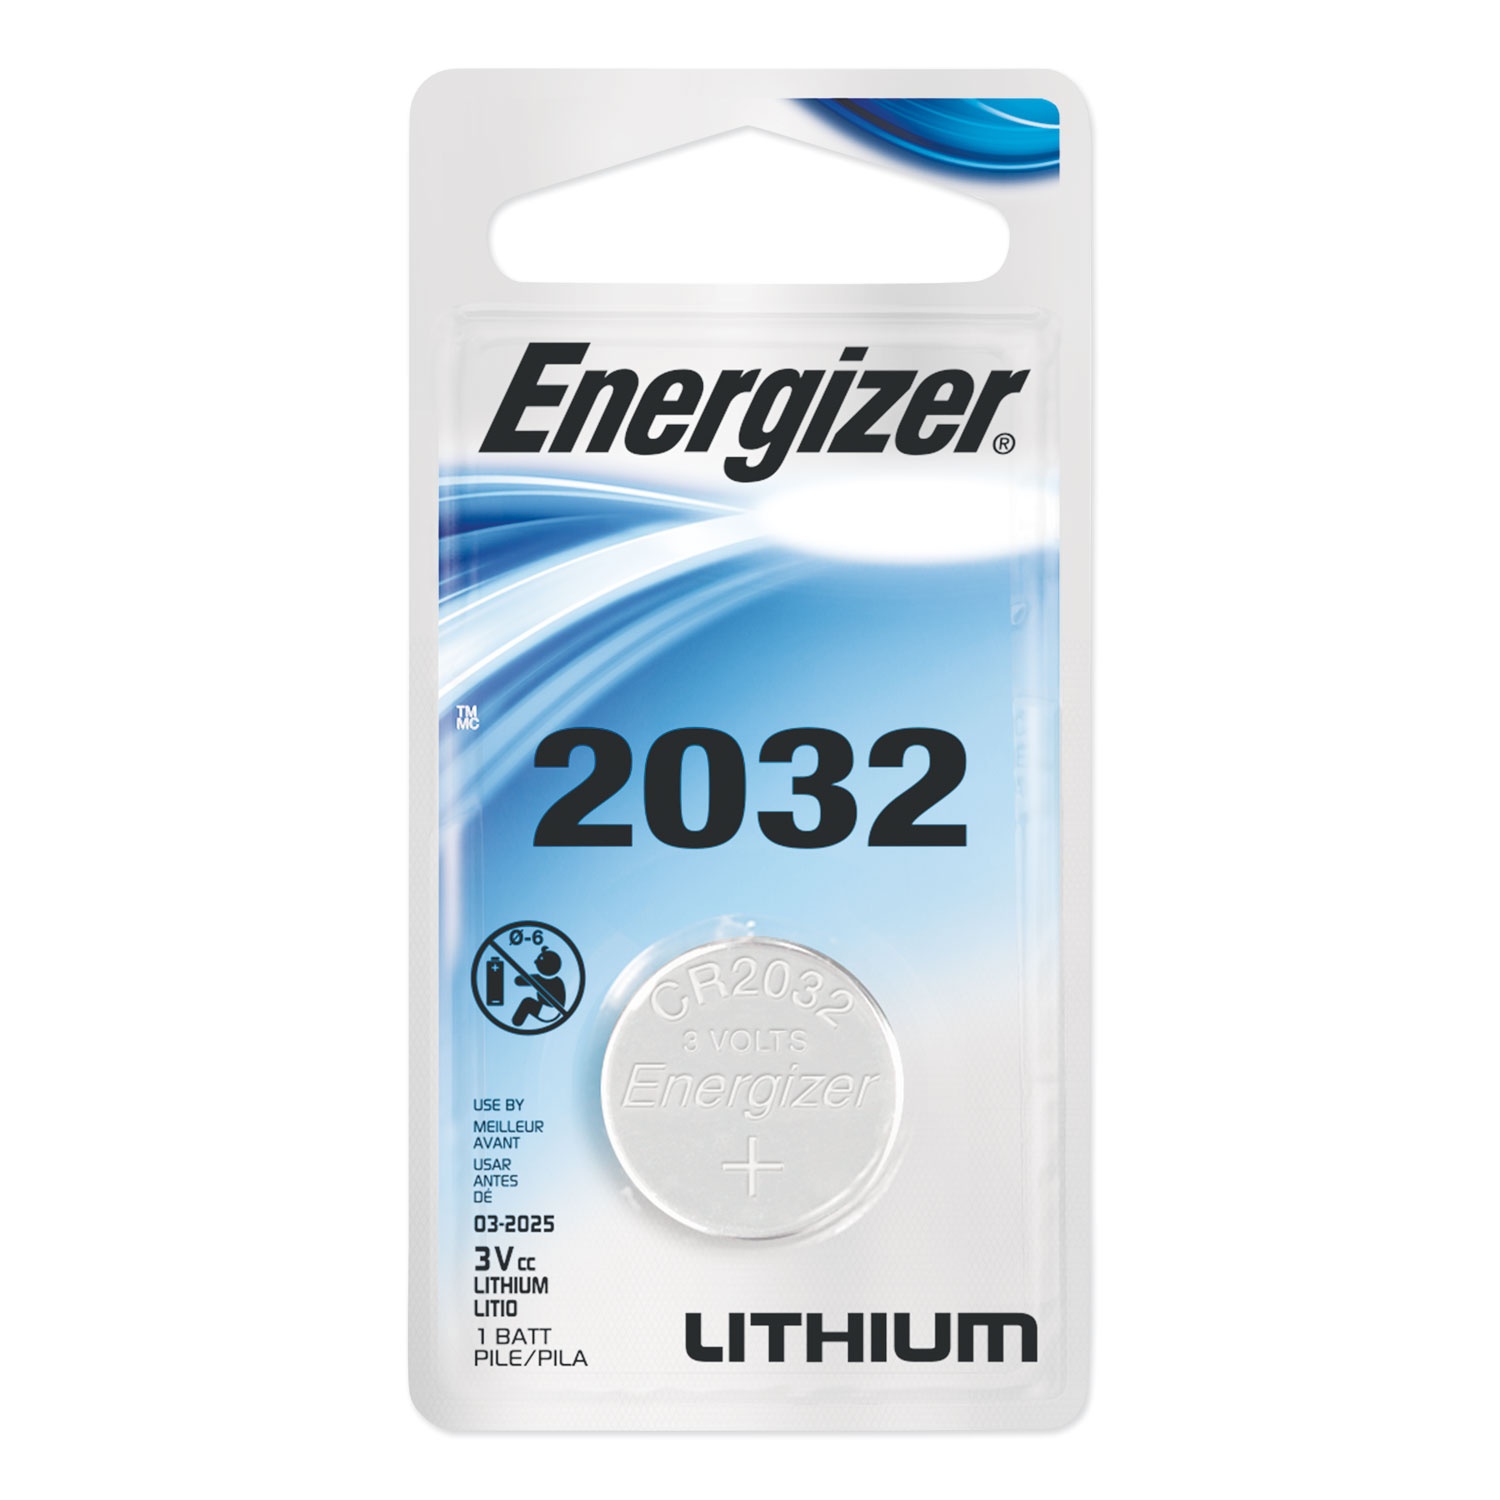 2032 battery same as 2025